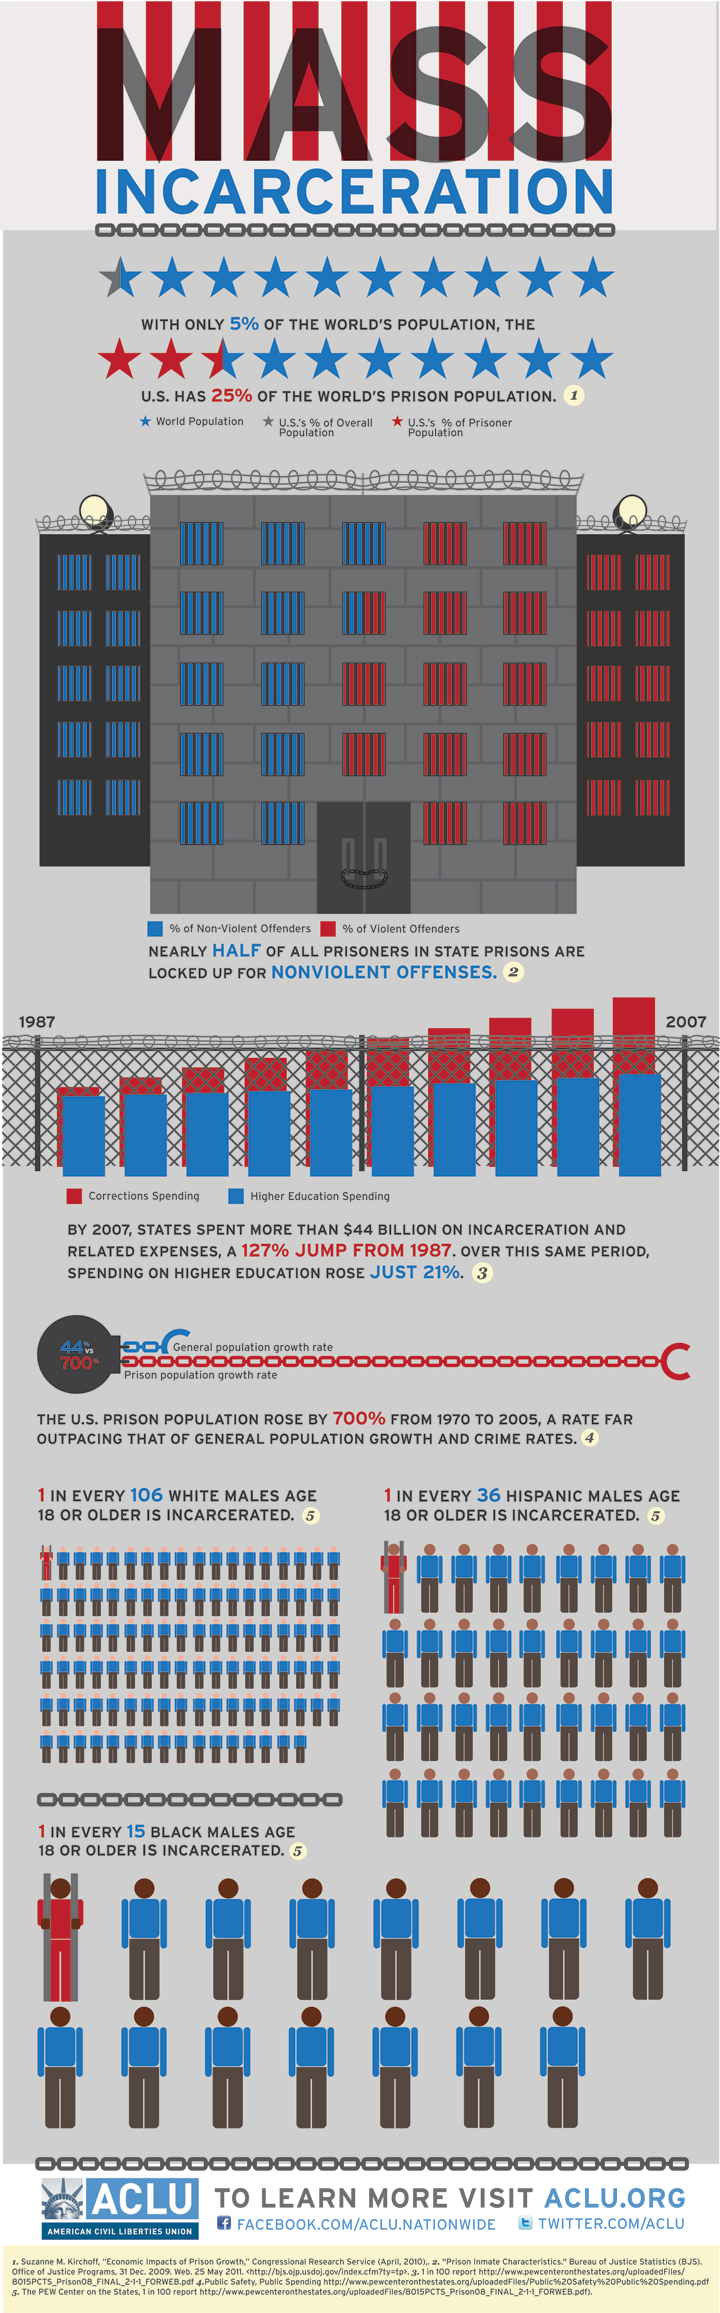 Mass incarceration infographic